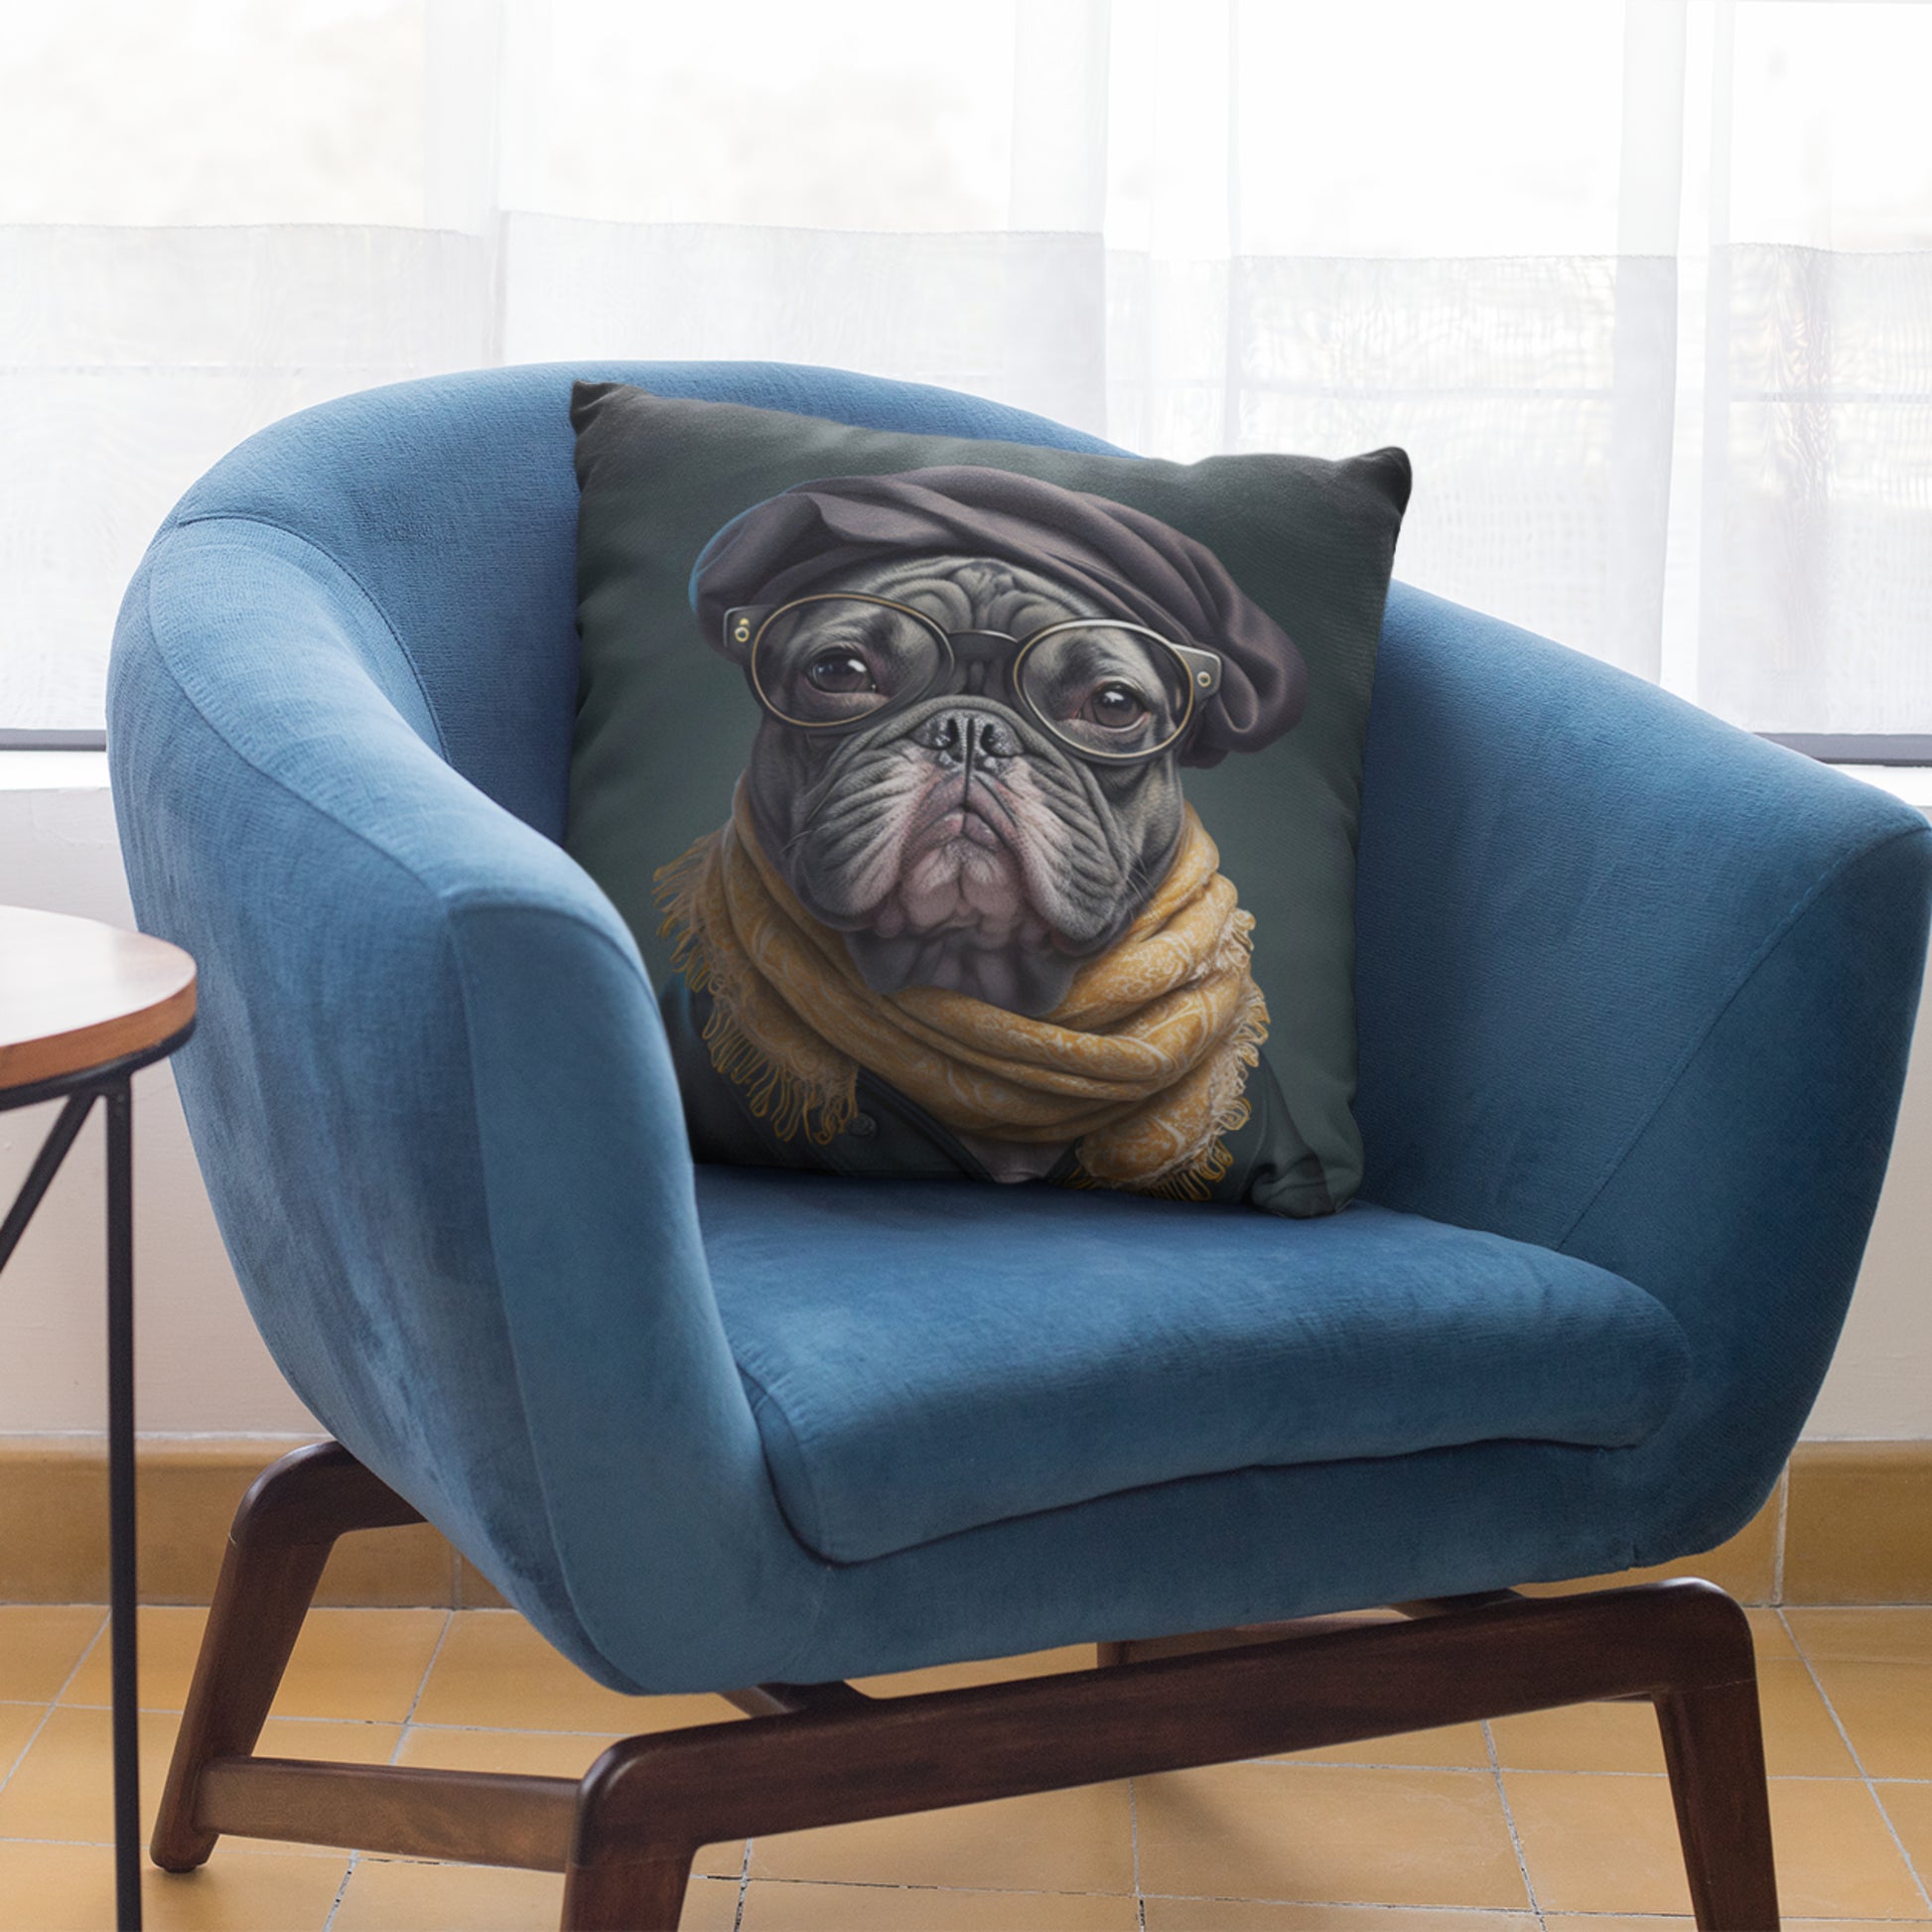 Stylish Printed Throw Pillow with Artist Bulldog